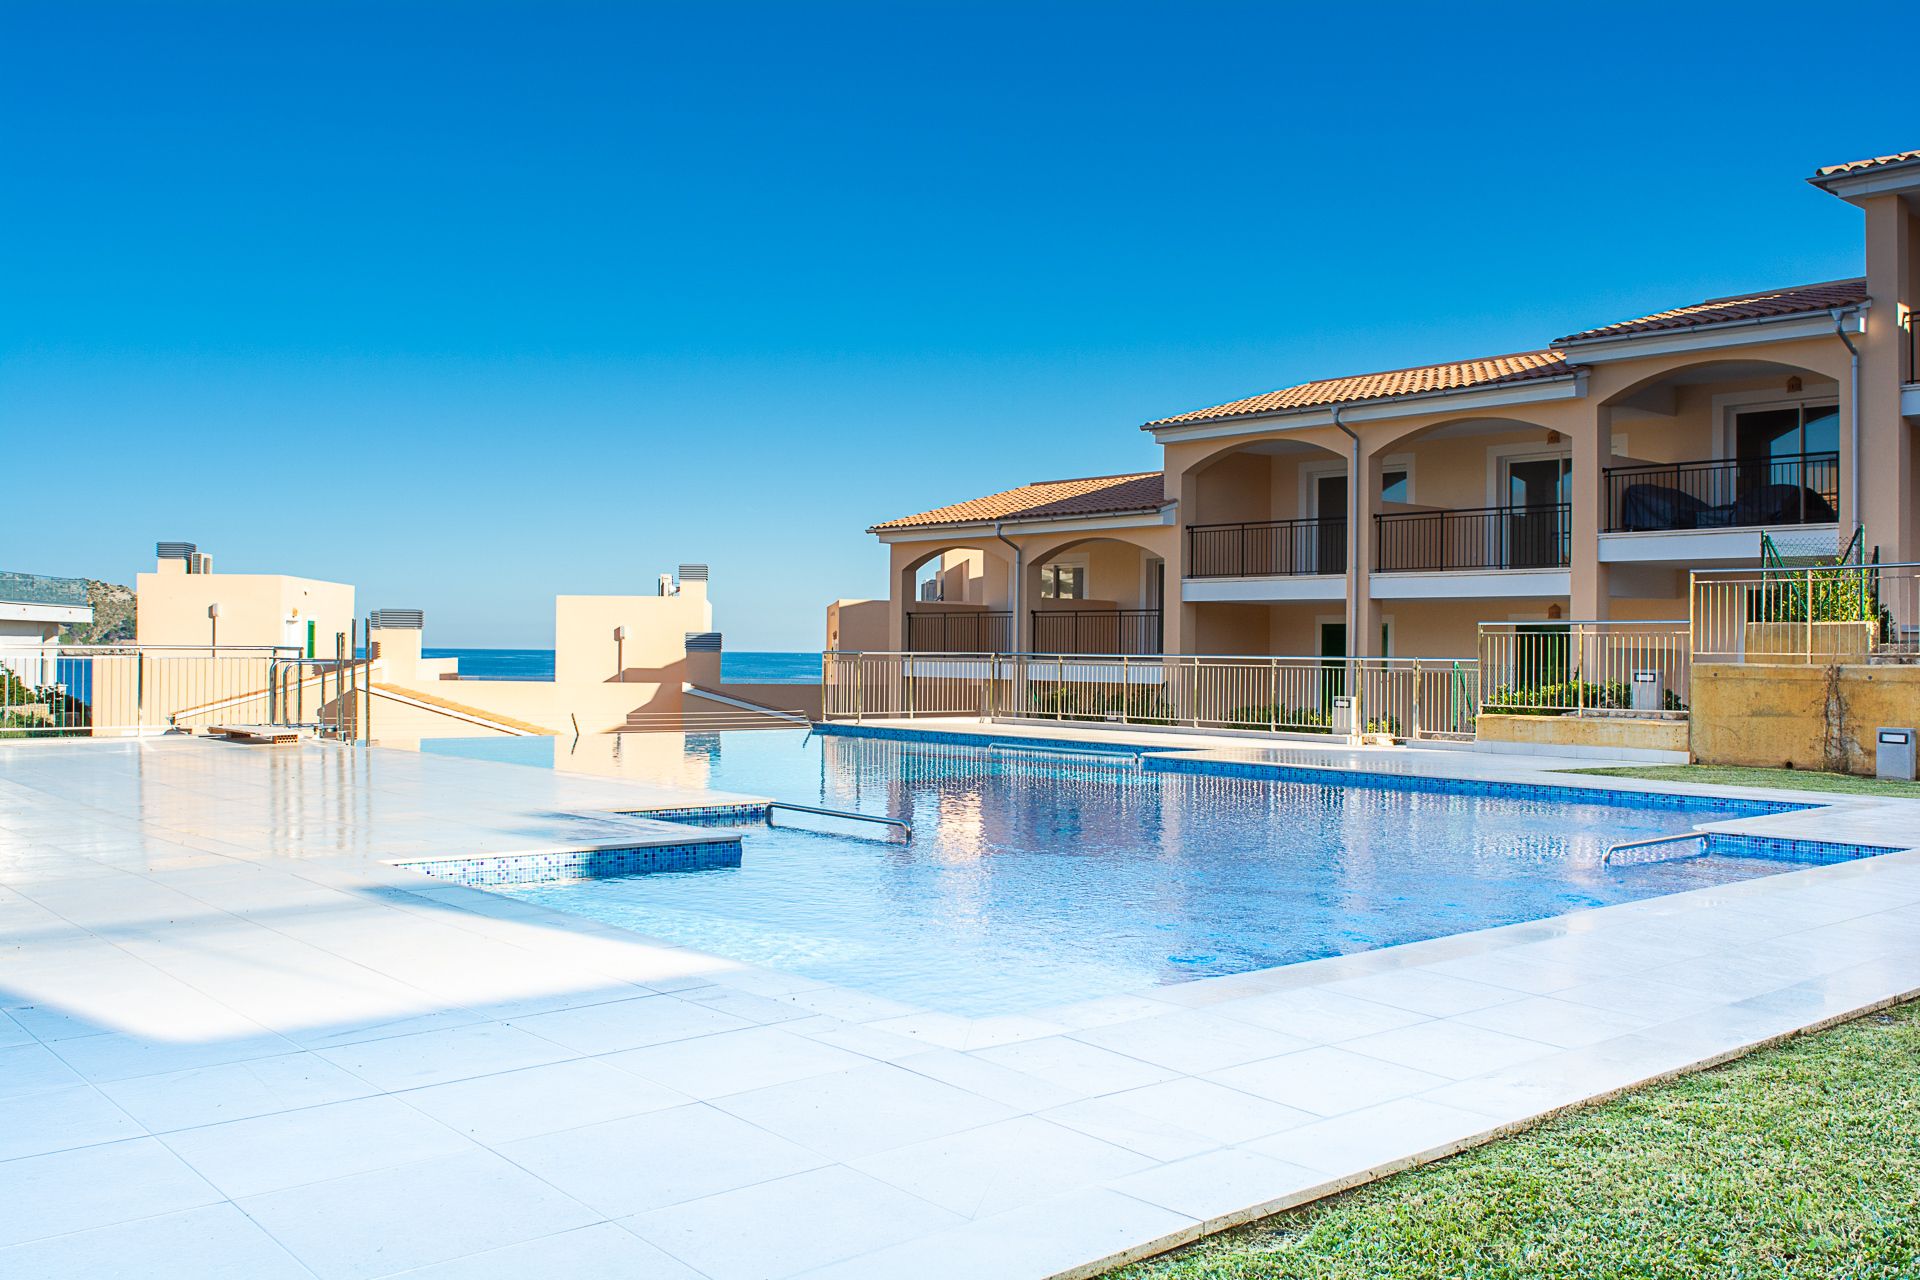 Moderno piso frente al mar con piscina comunitaria en una ubicación ideal, 07590 Cala Ratjada (España), Piso en planta baja